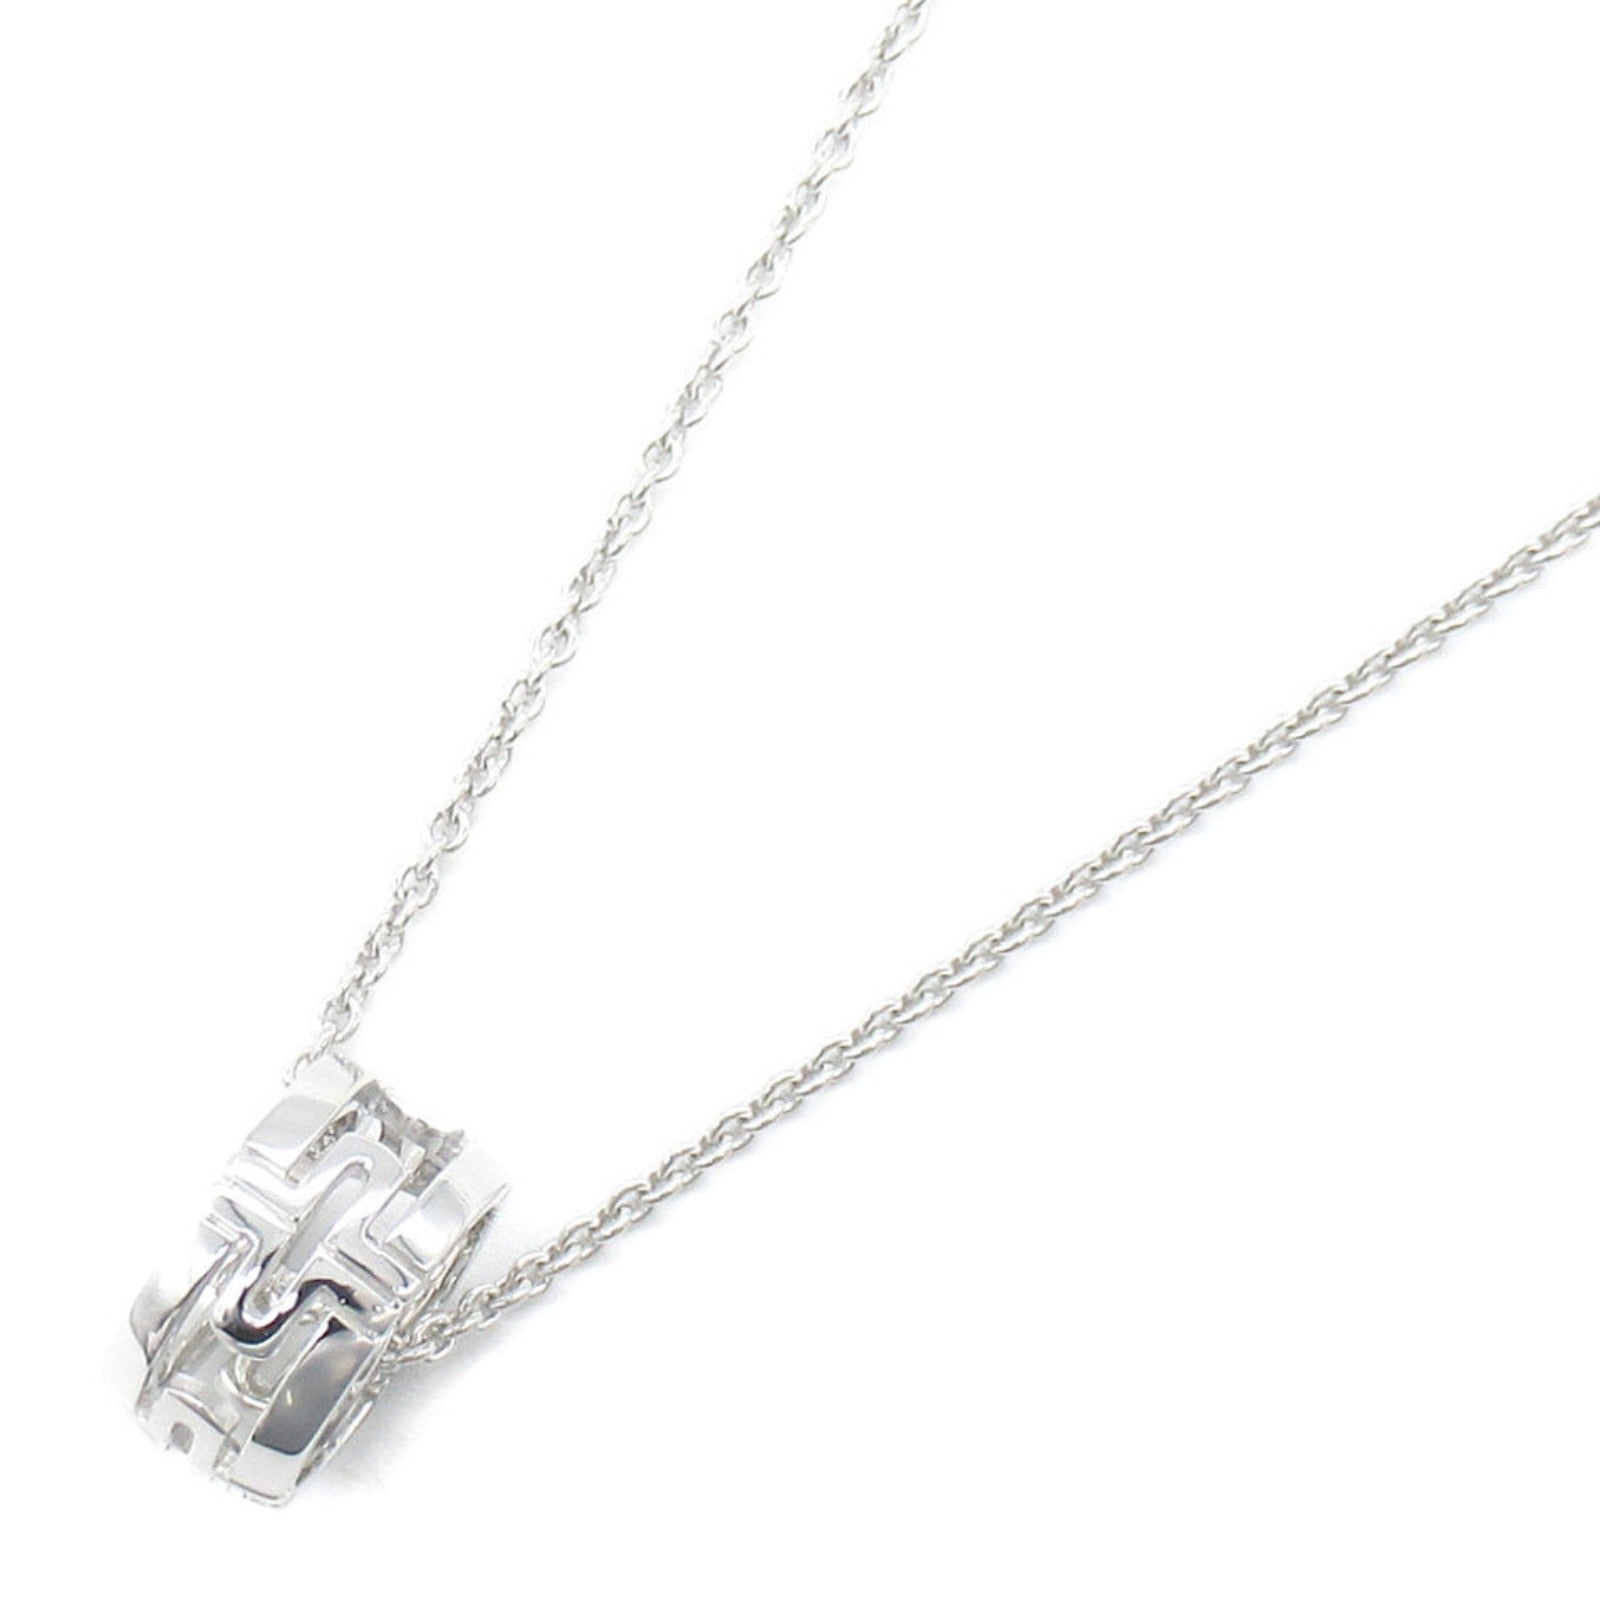 Bulgari BVLGARI Palentine necklace necklace jewelry K18WG (White G)   Silver